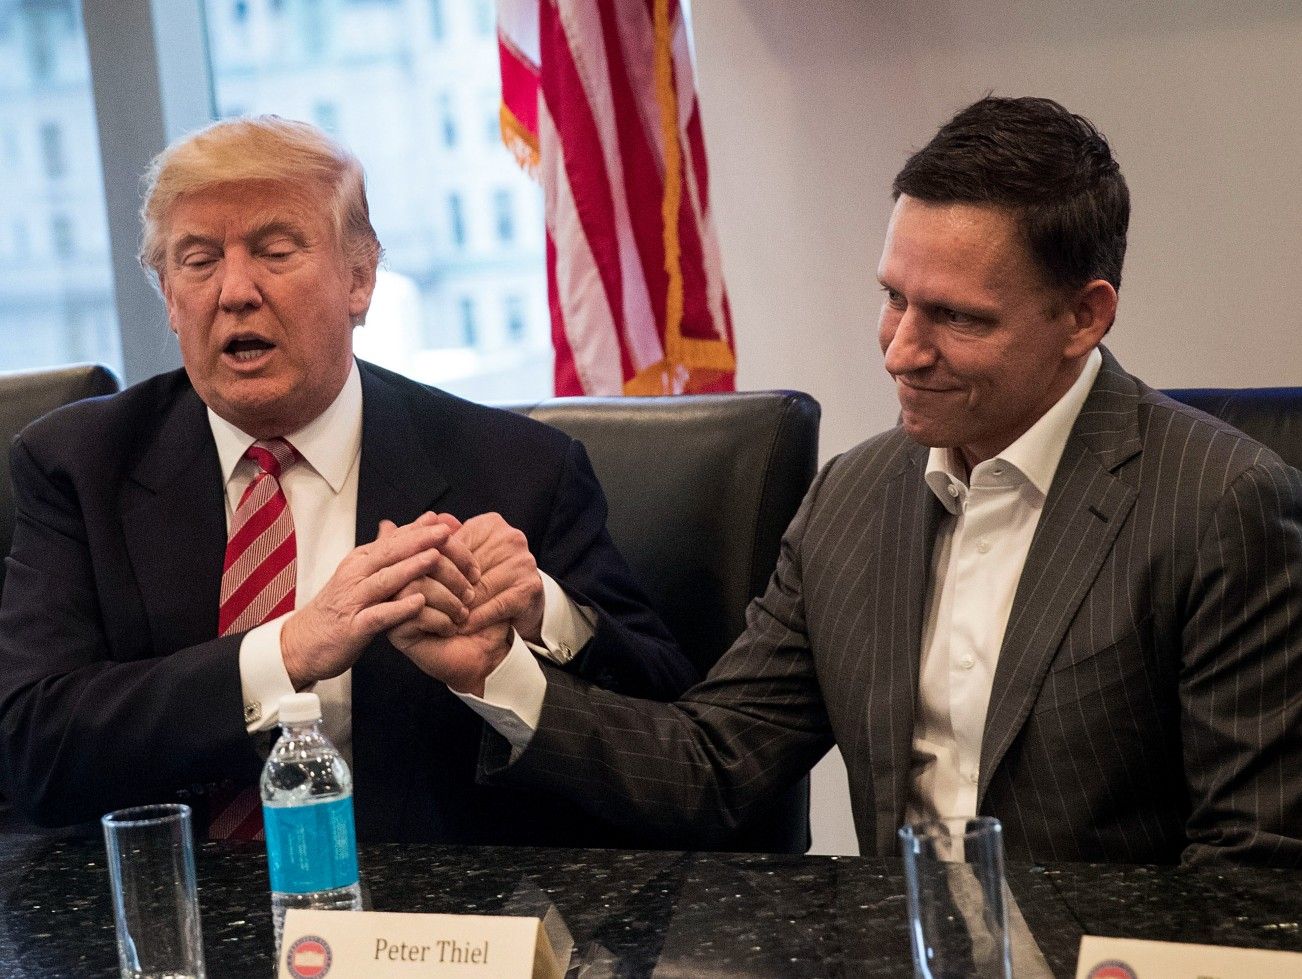 Peter Thiel med Donald Trump. Kilde: Getty Images